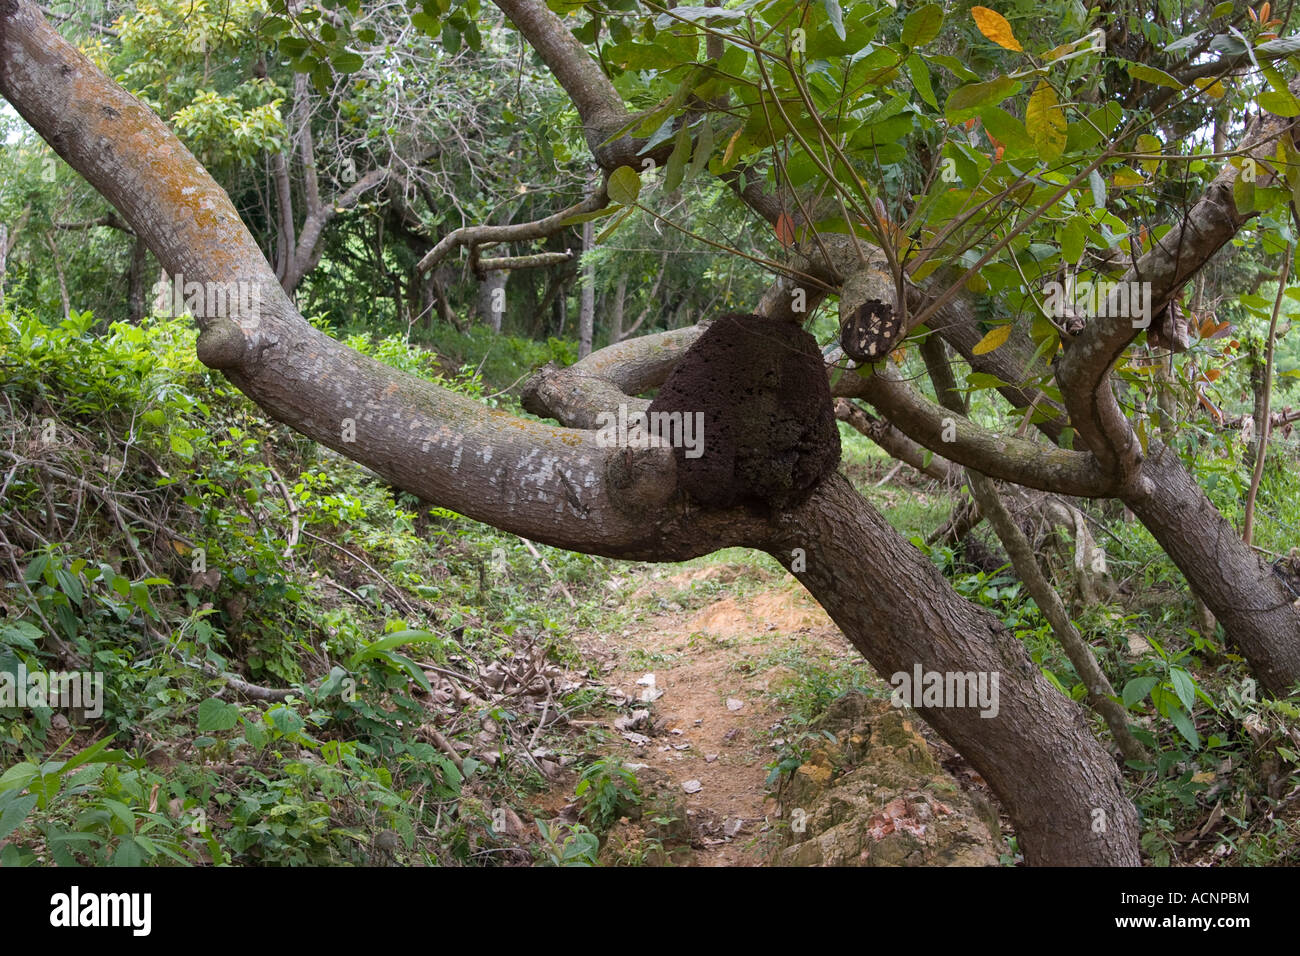 Arboreal nesting termites. Capira, Panama, Central America Stock Photo